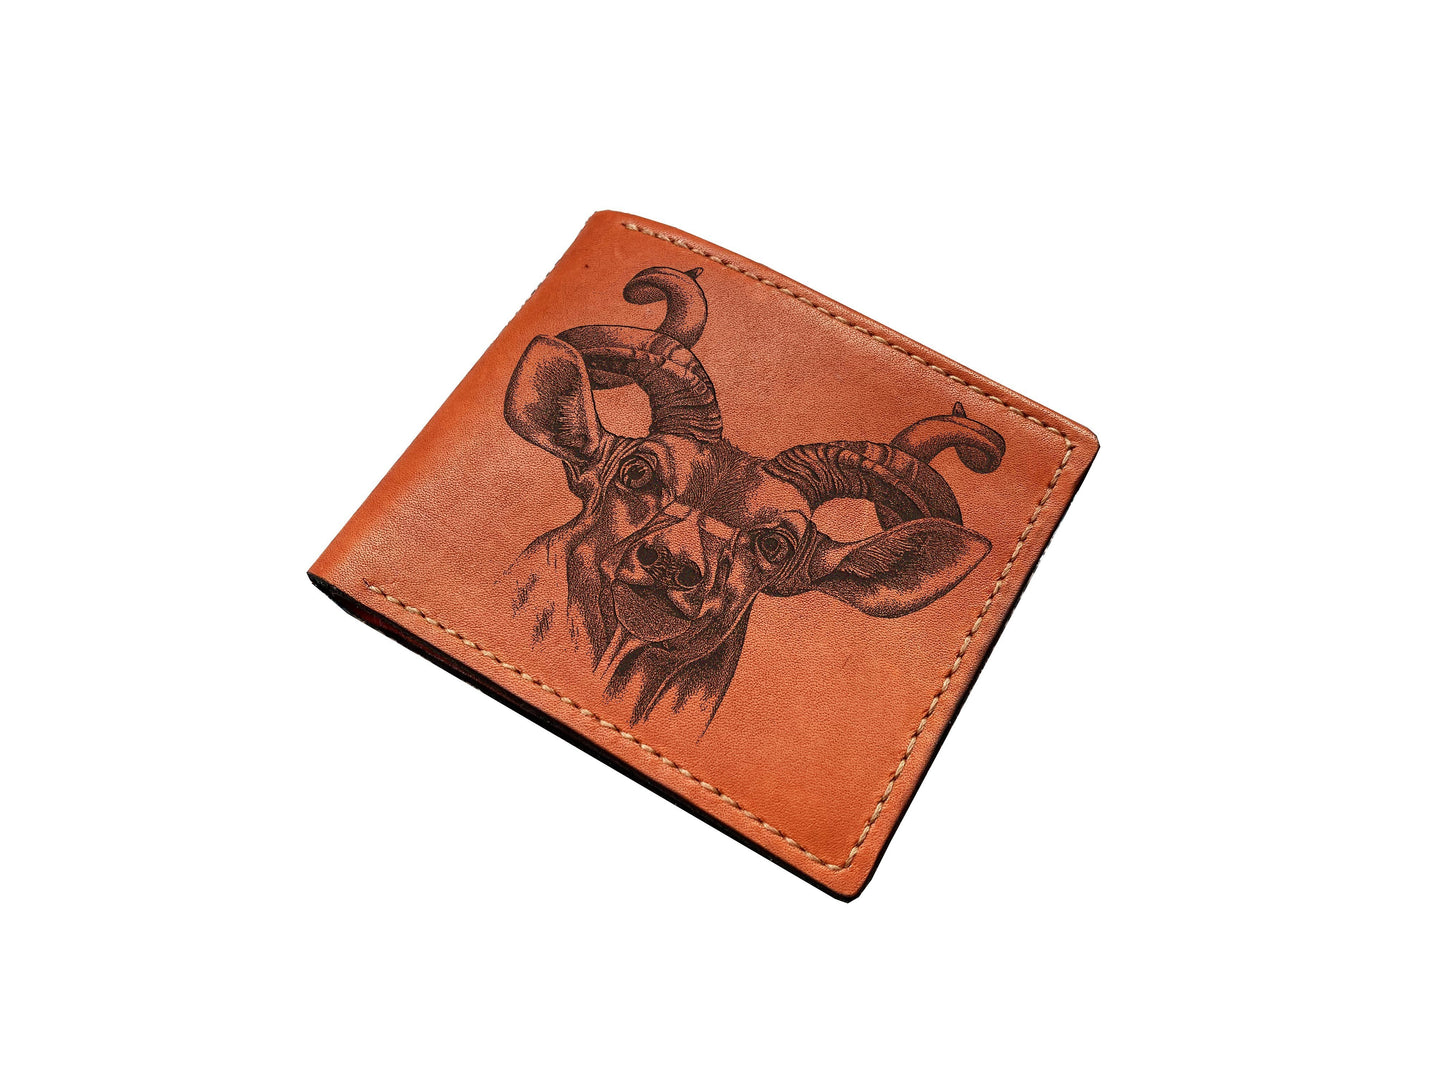 Bighorn sheep sketch leather wallet, Ram head men's wallet, animal pattern gift for him, wallet for dad, gift for boyfriend